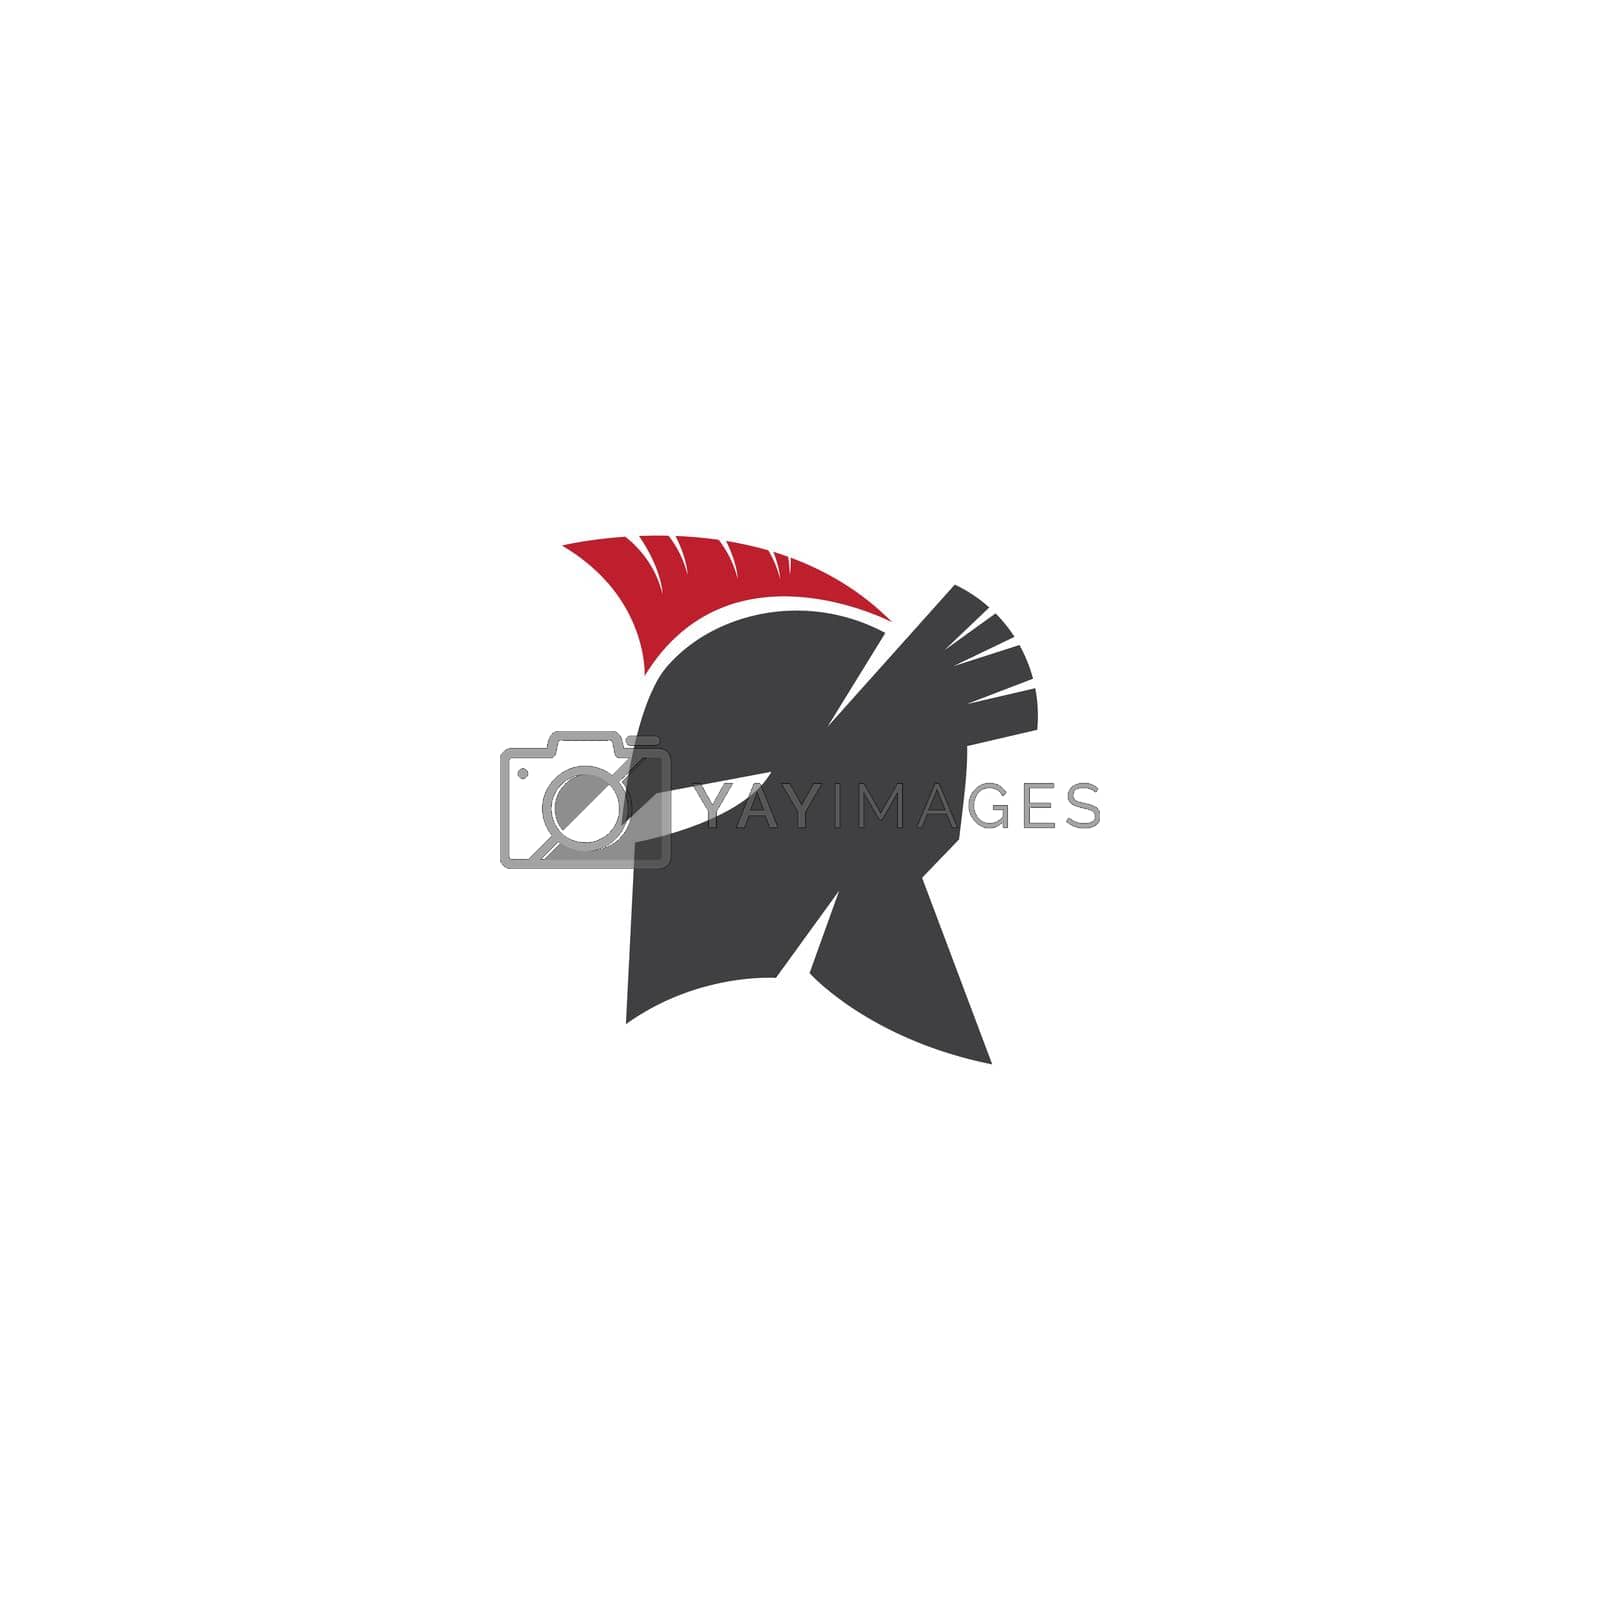 Royalty free image of Spartan helmet logo by awk